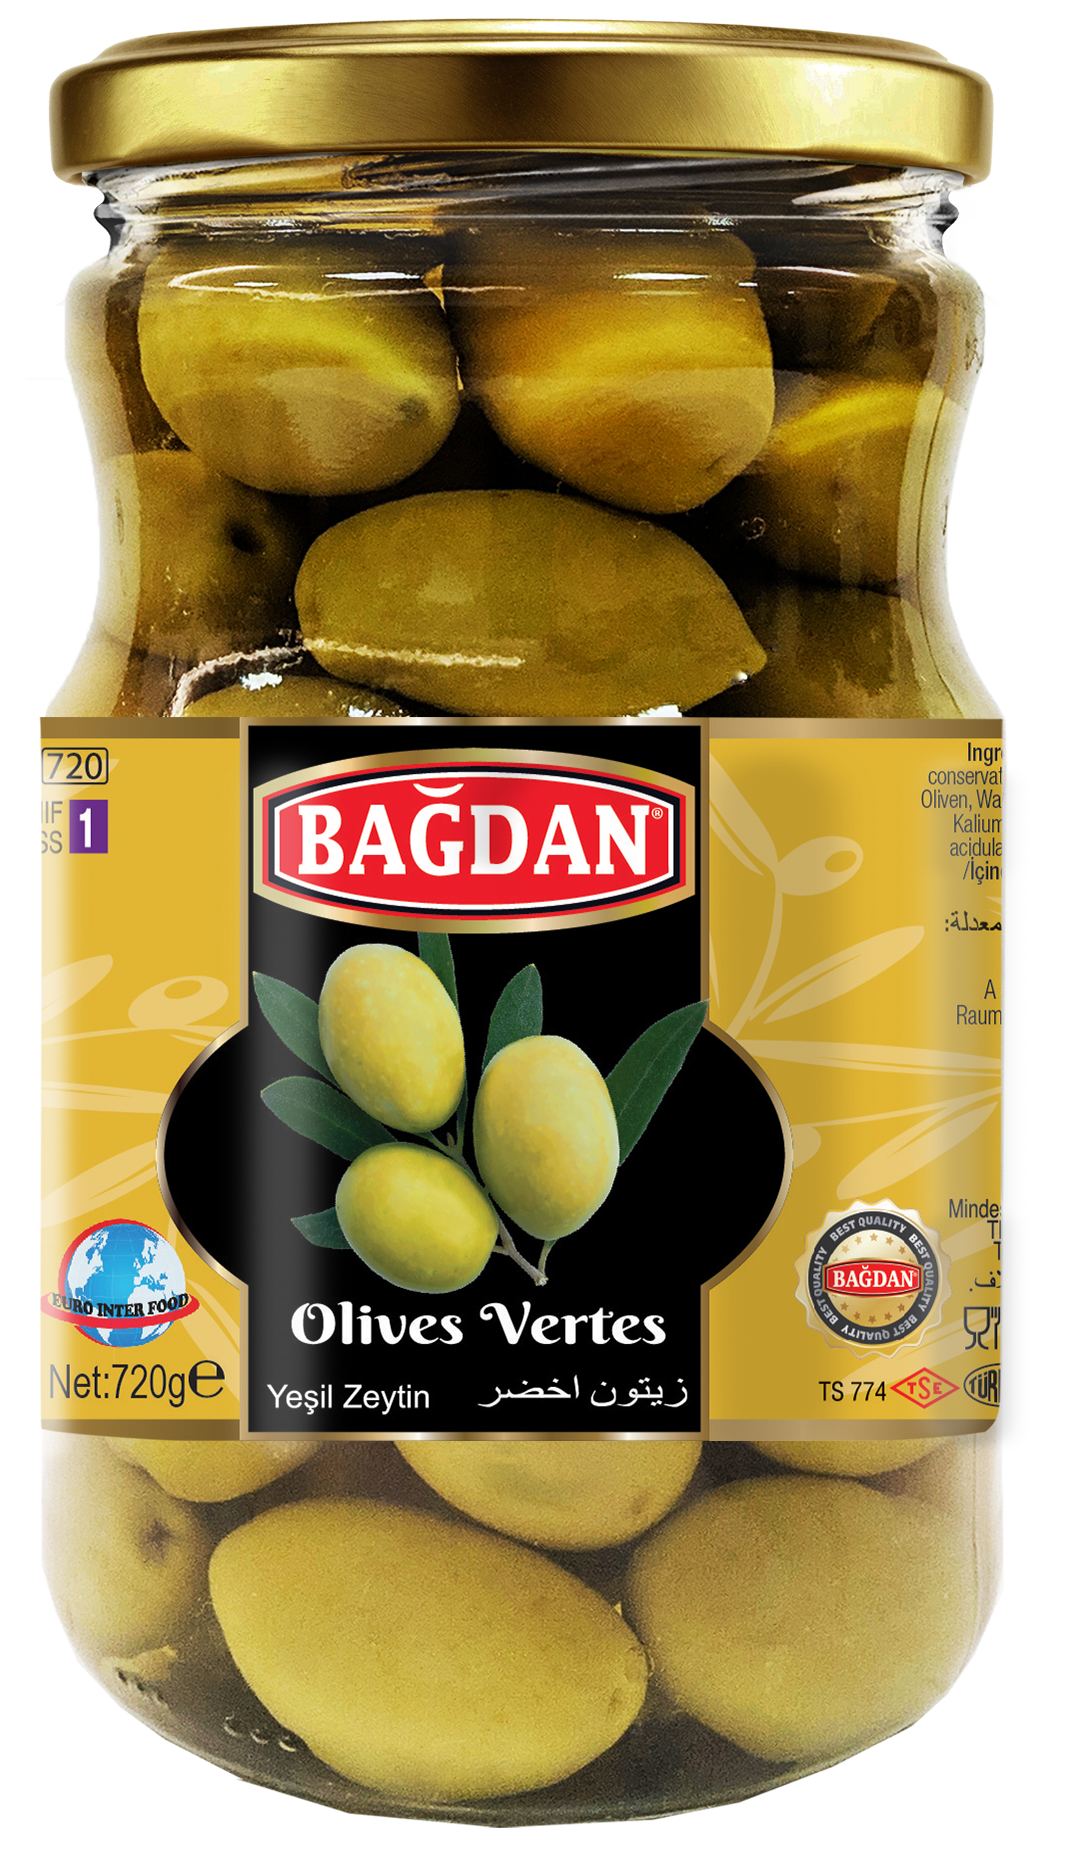 BAGDAN CAM YESIL ZEYTIN (olives vertes)